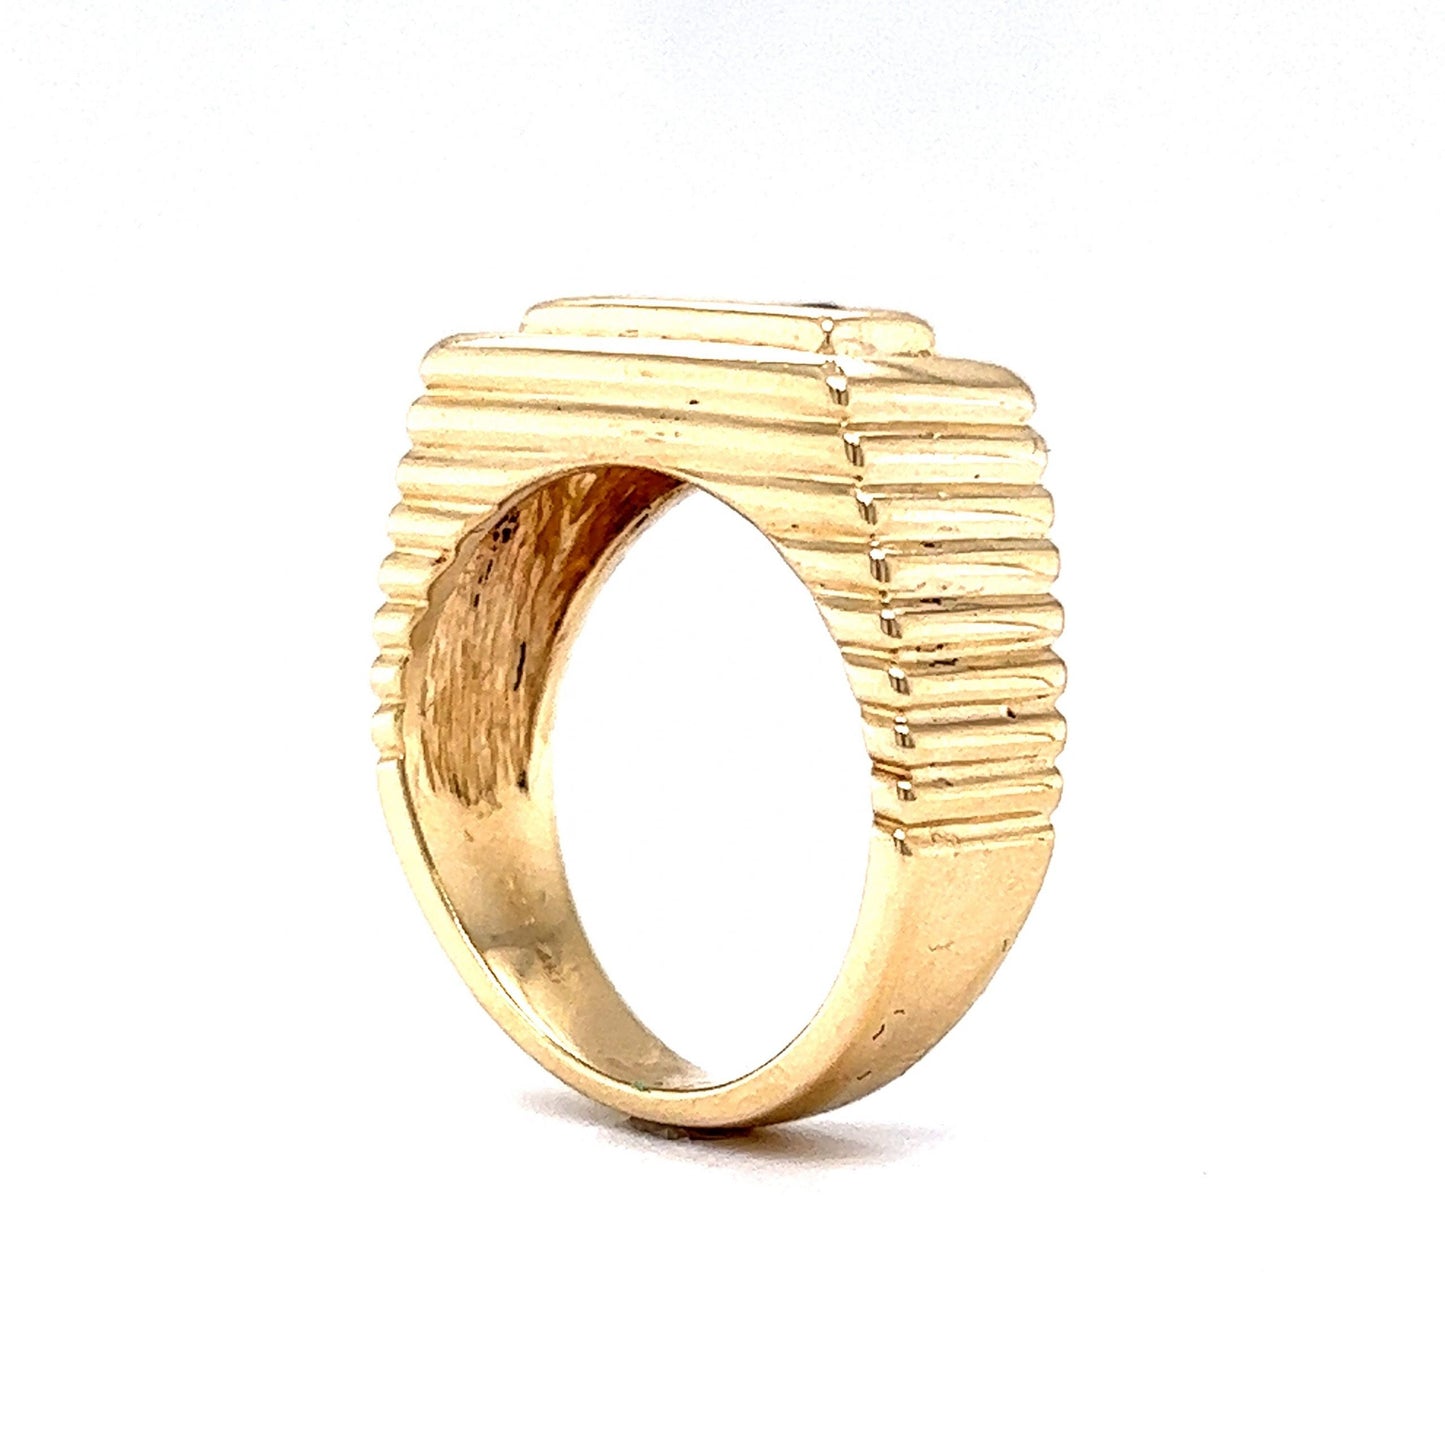 Textured Men's Sapphire & Diamond Statement Ring in 14k Yellow Gold